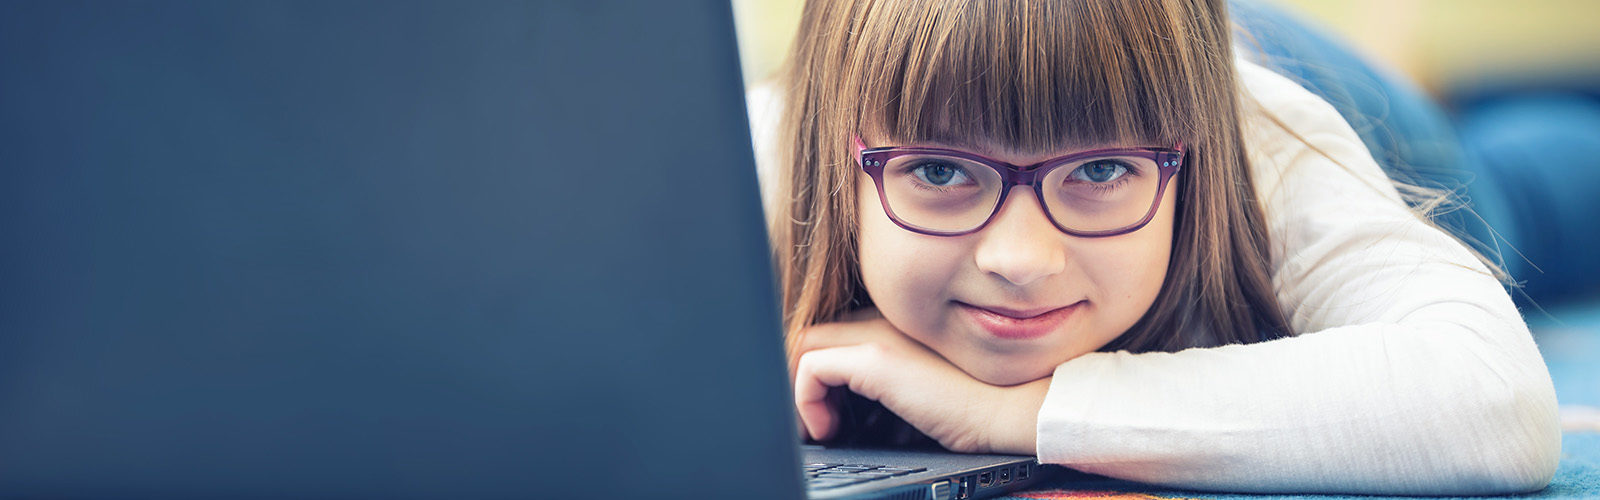 pre-teen wearing purple glasses on floor with laptop computer